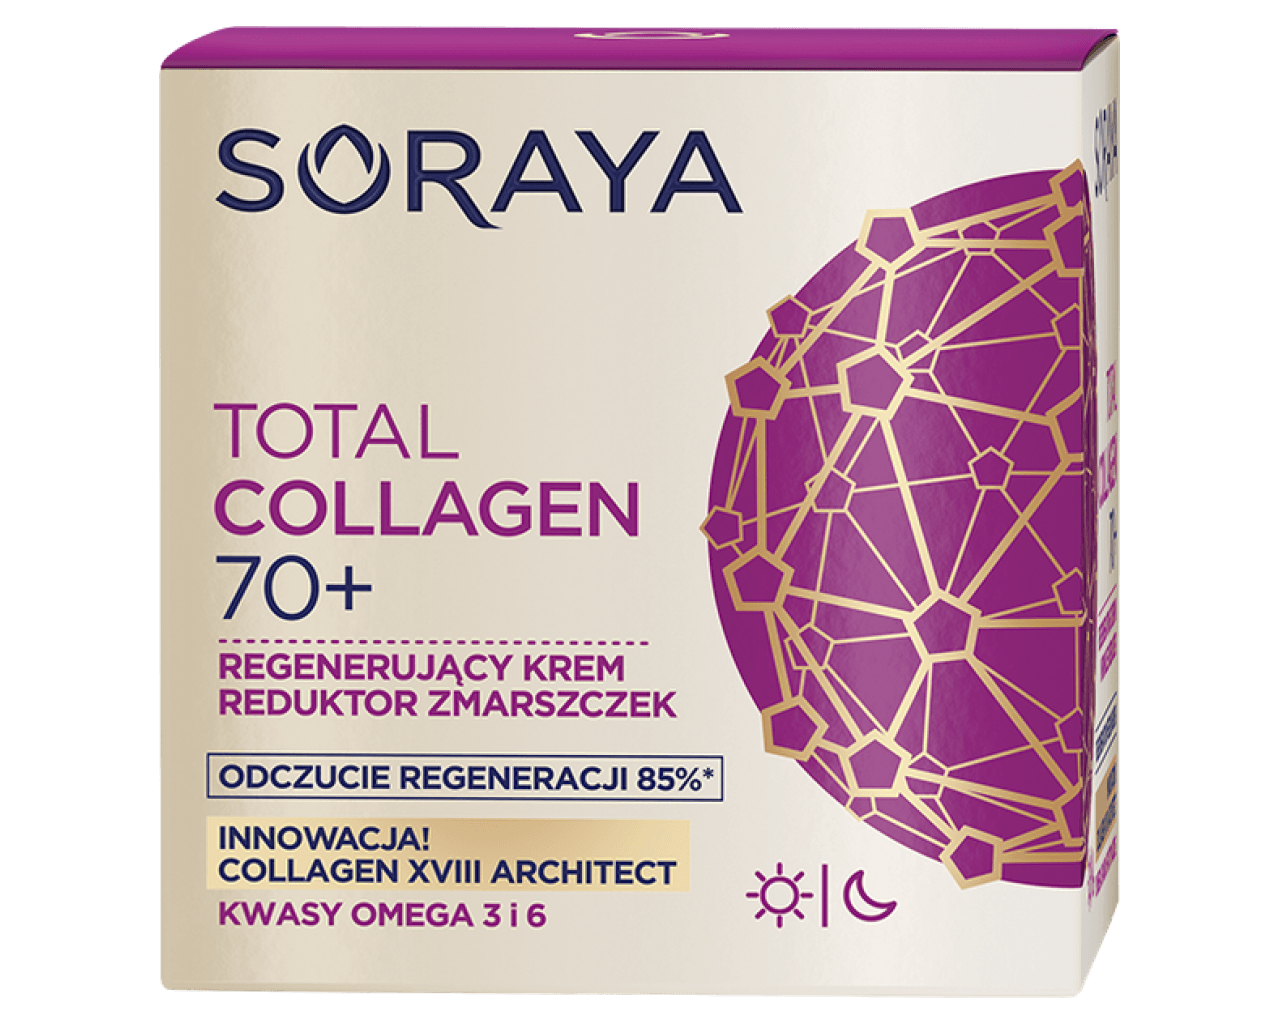 Total Collagen dnevno-nočna krema z naprednim kolagenskim kompleksom